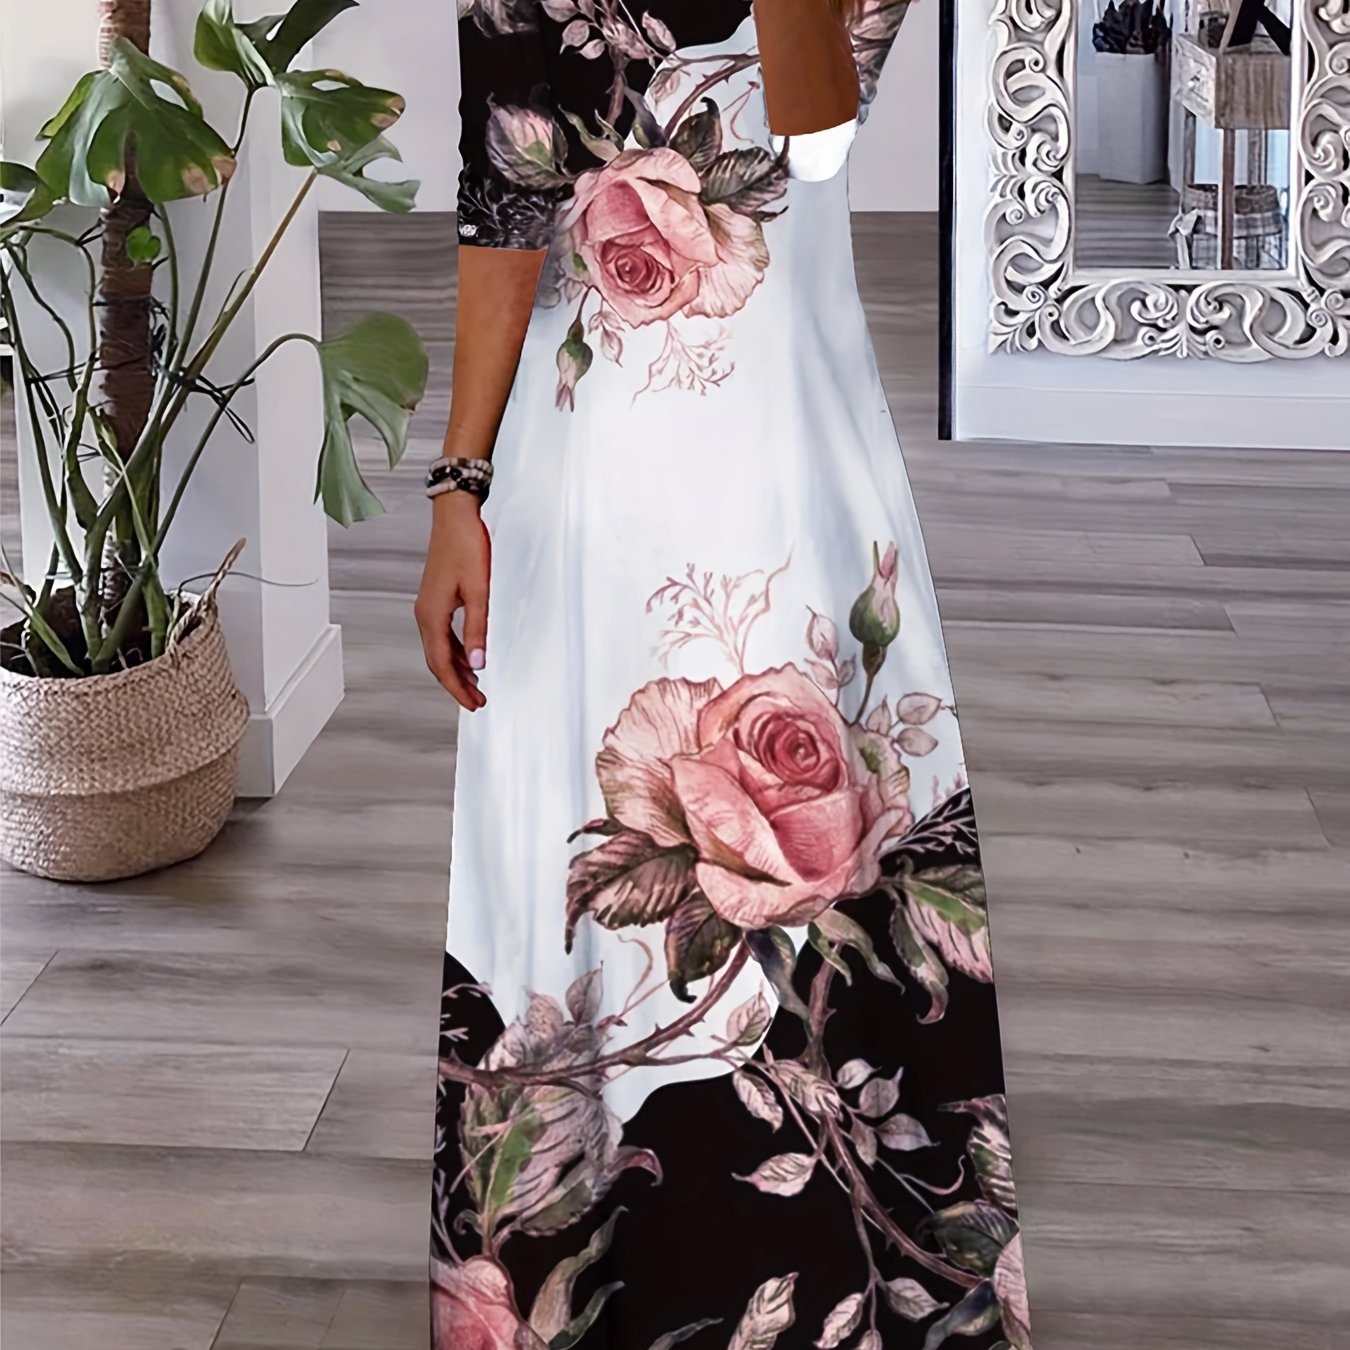 floral print 3 4 sleeve dress casual v neck maxi dress womens clothing